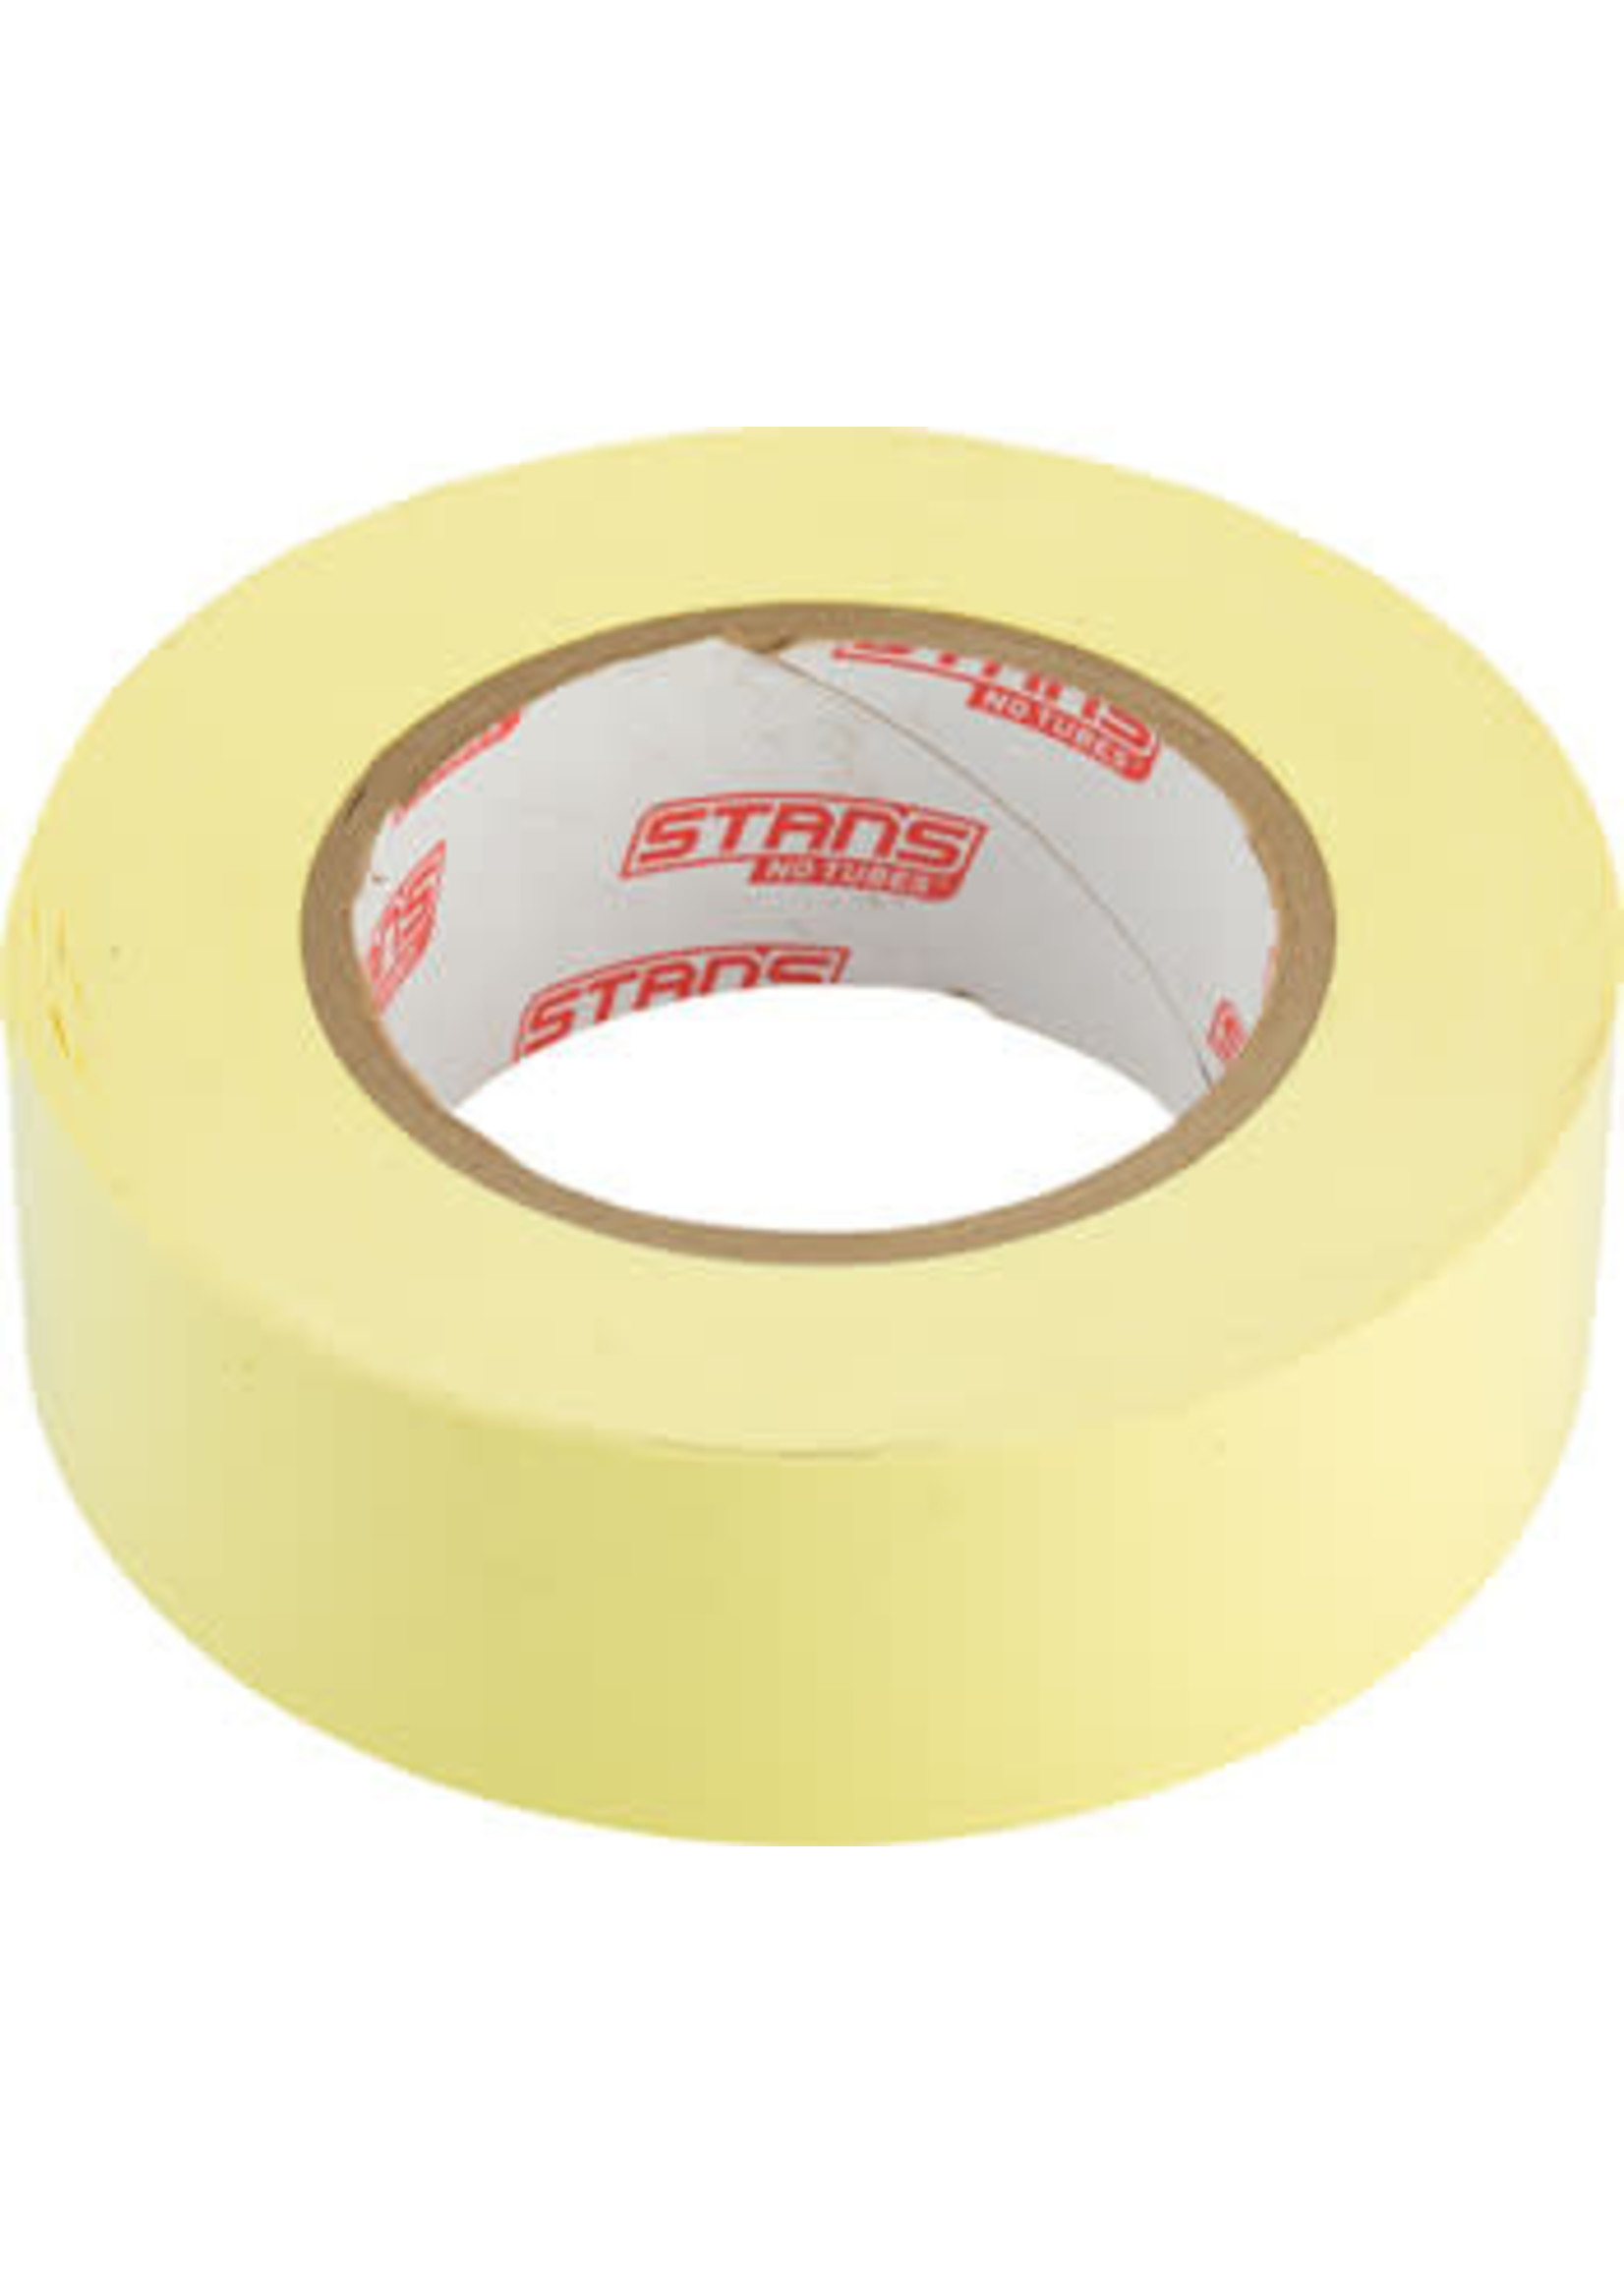 Stan's No-Tubes Stan's NoTubes Rim Tape: 30mm x 60 yard roll